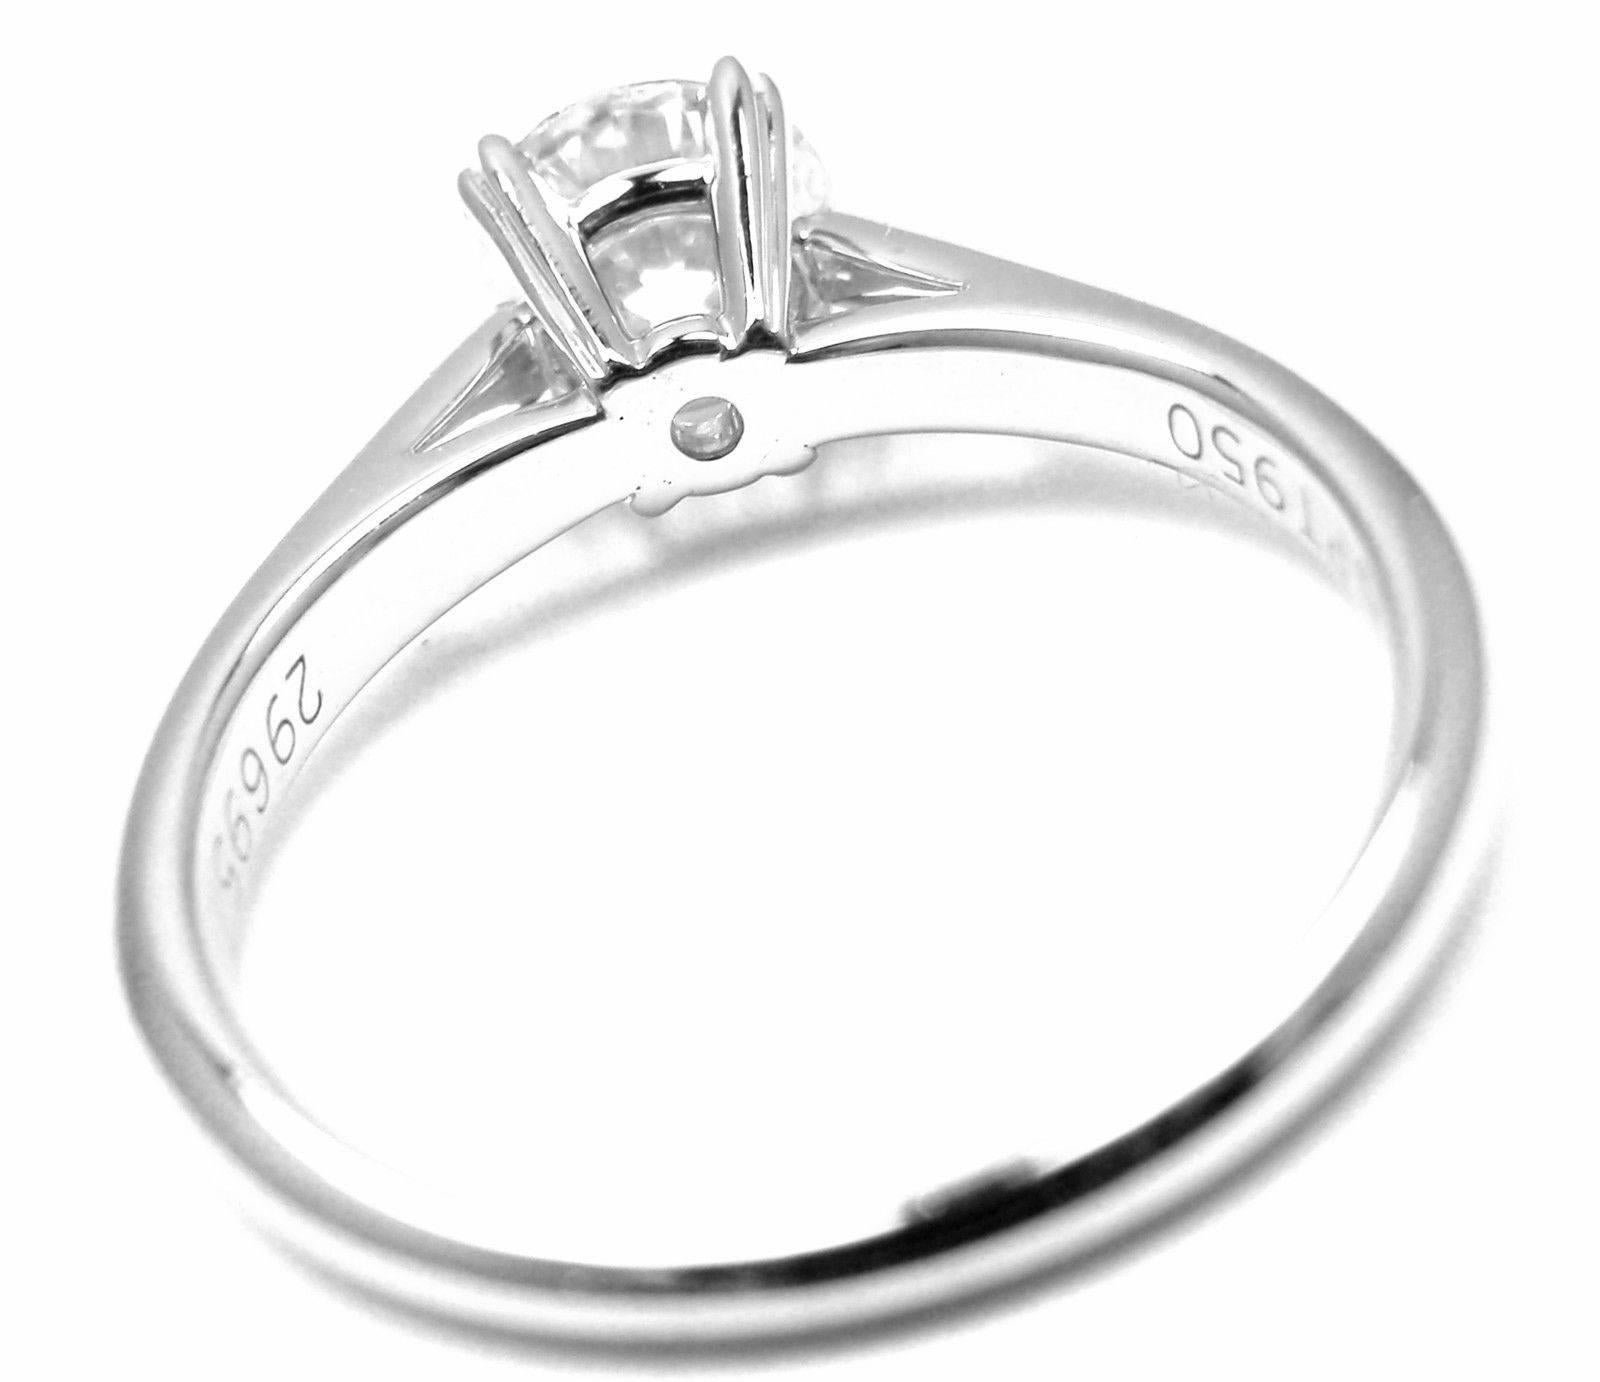 .56 carat diamond ring